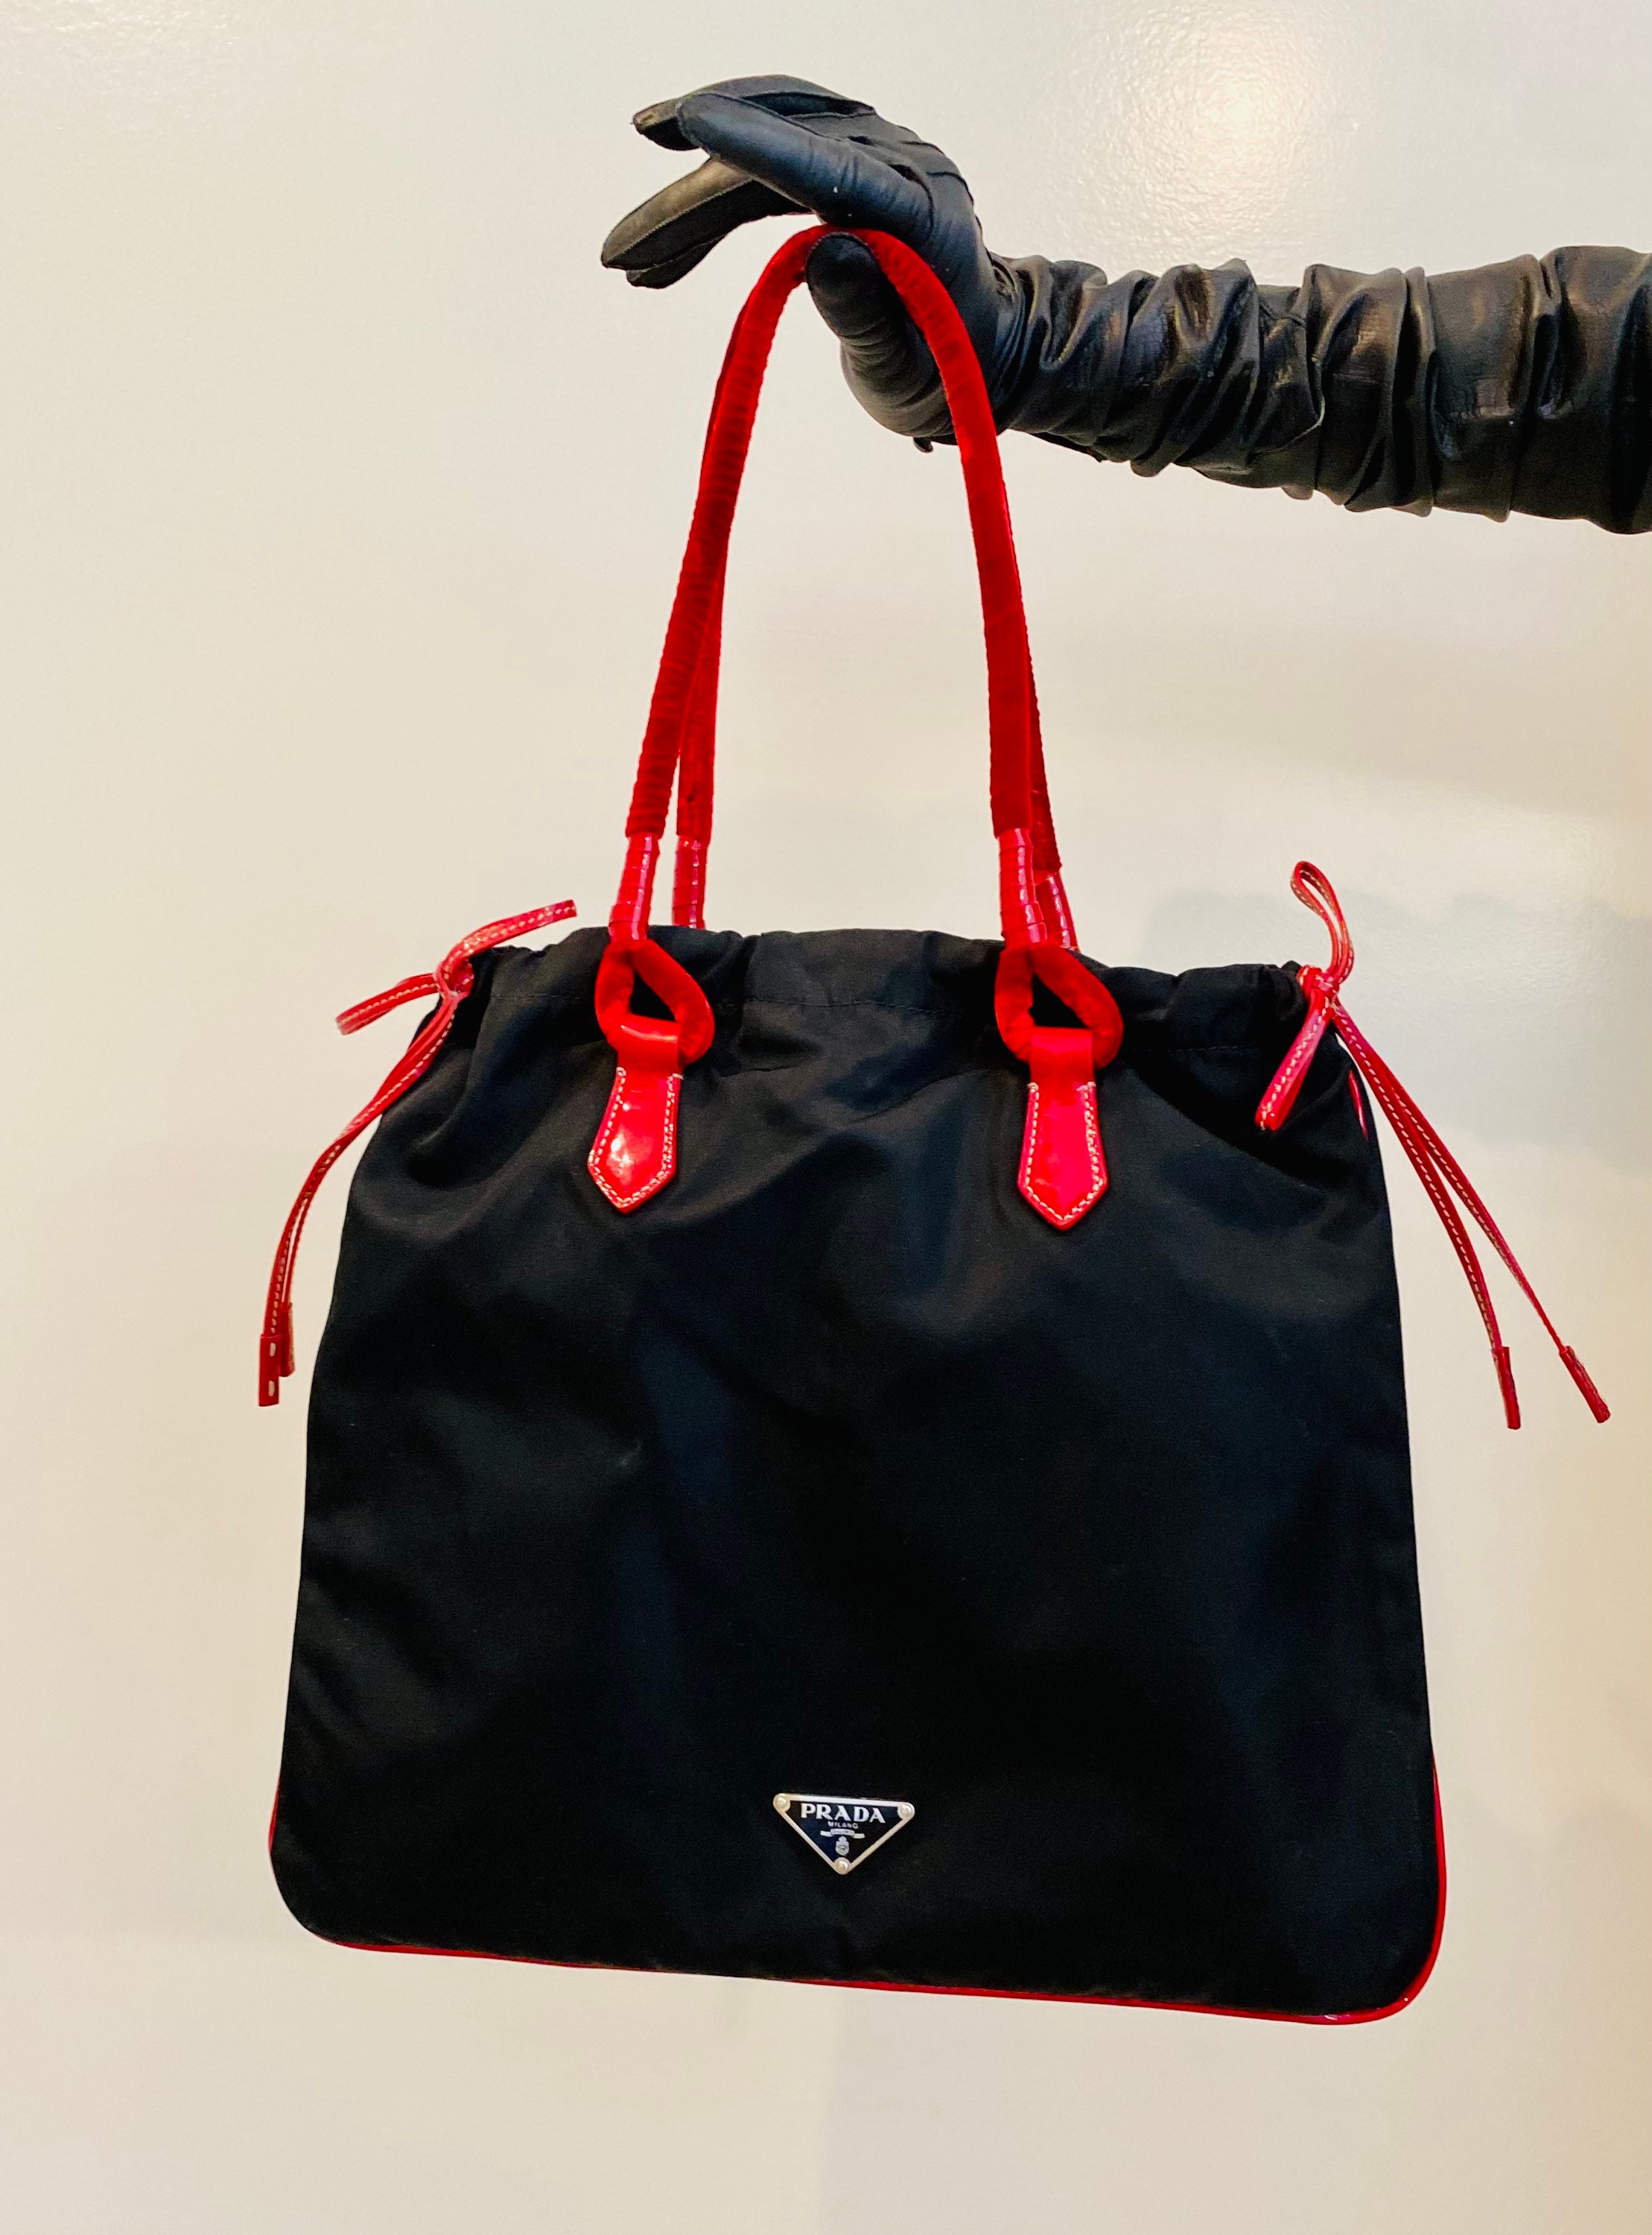 PRADA Bag. Prada Tessuto Vintage Dark Red Berry Red Shoulder 